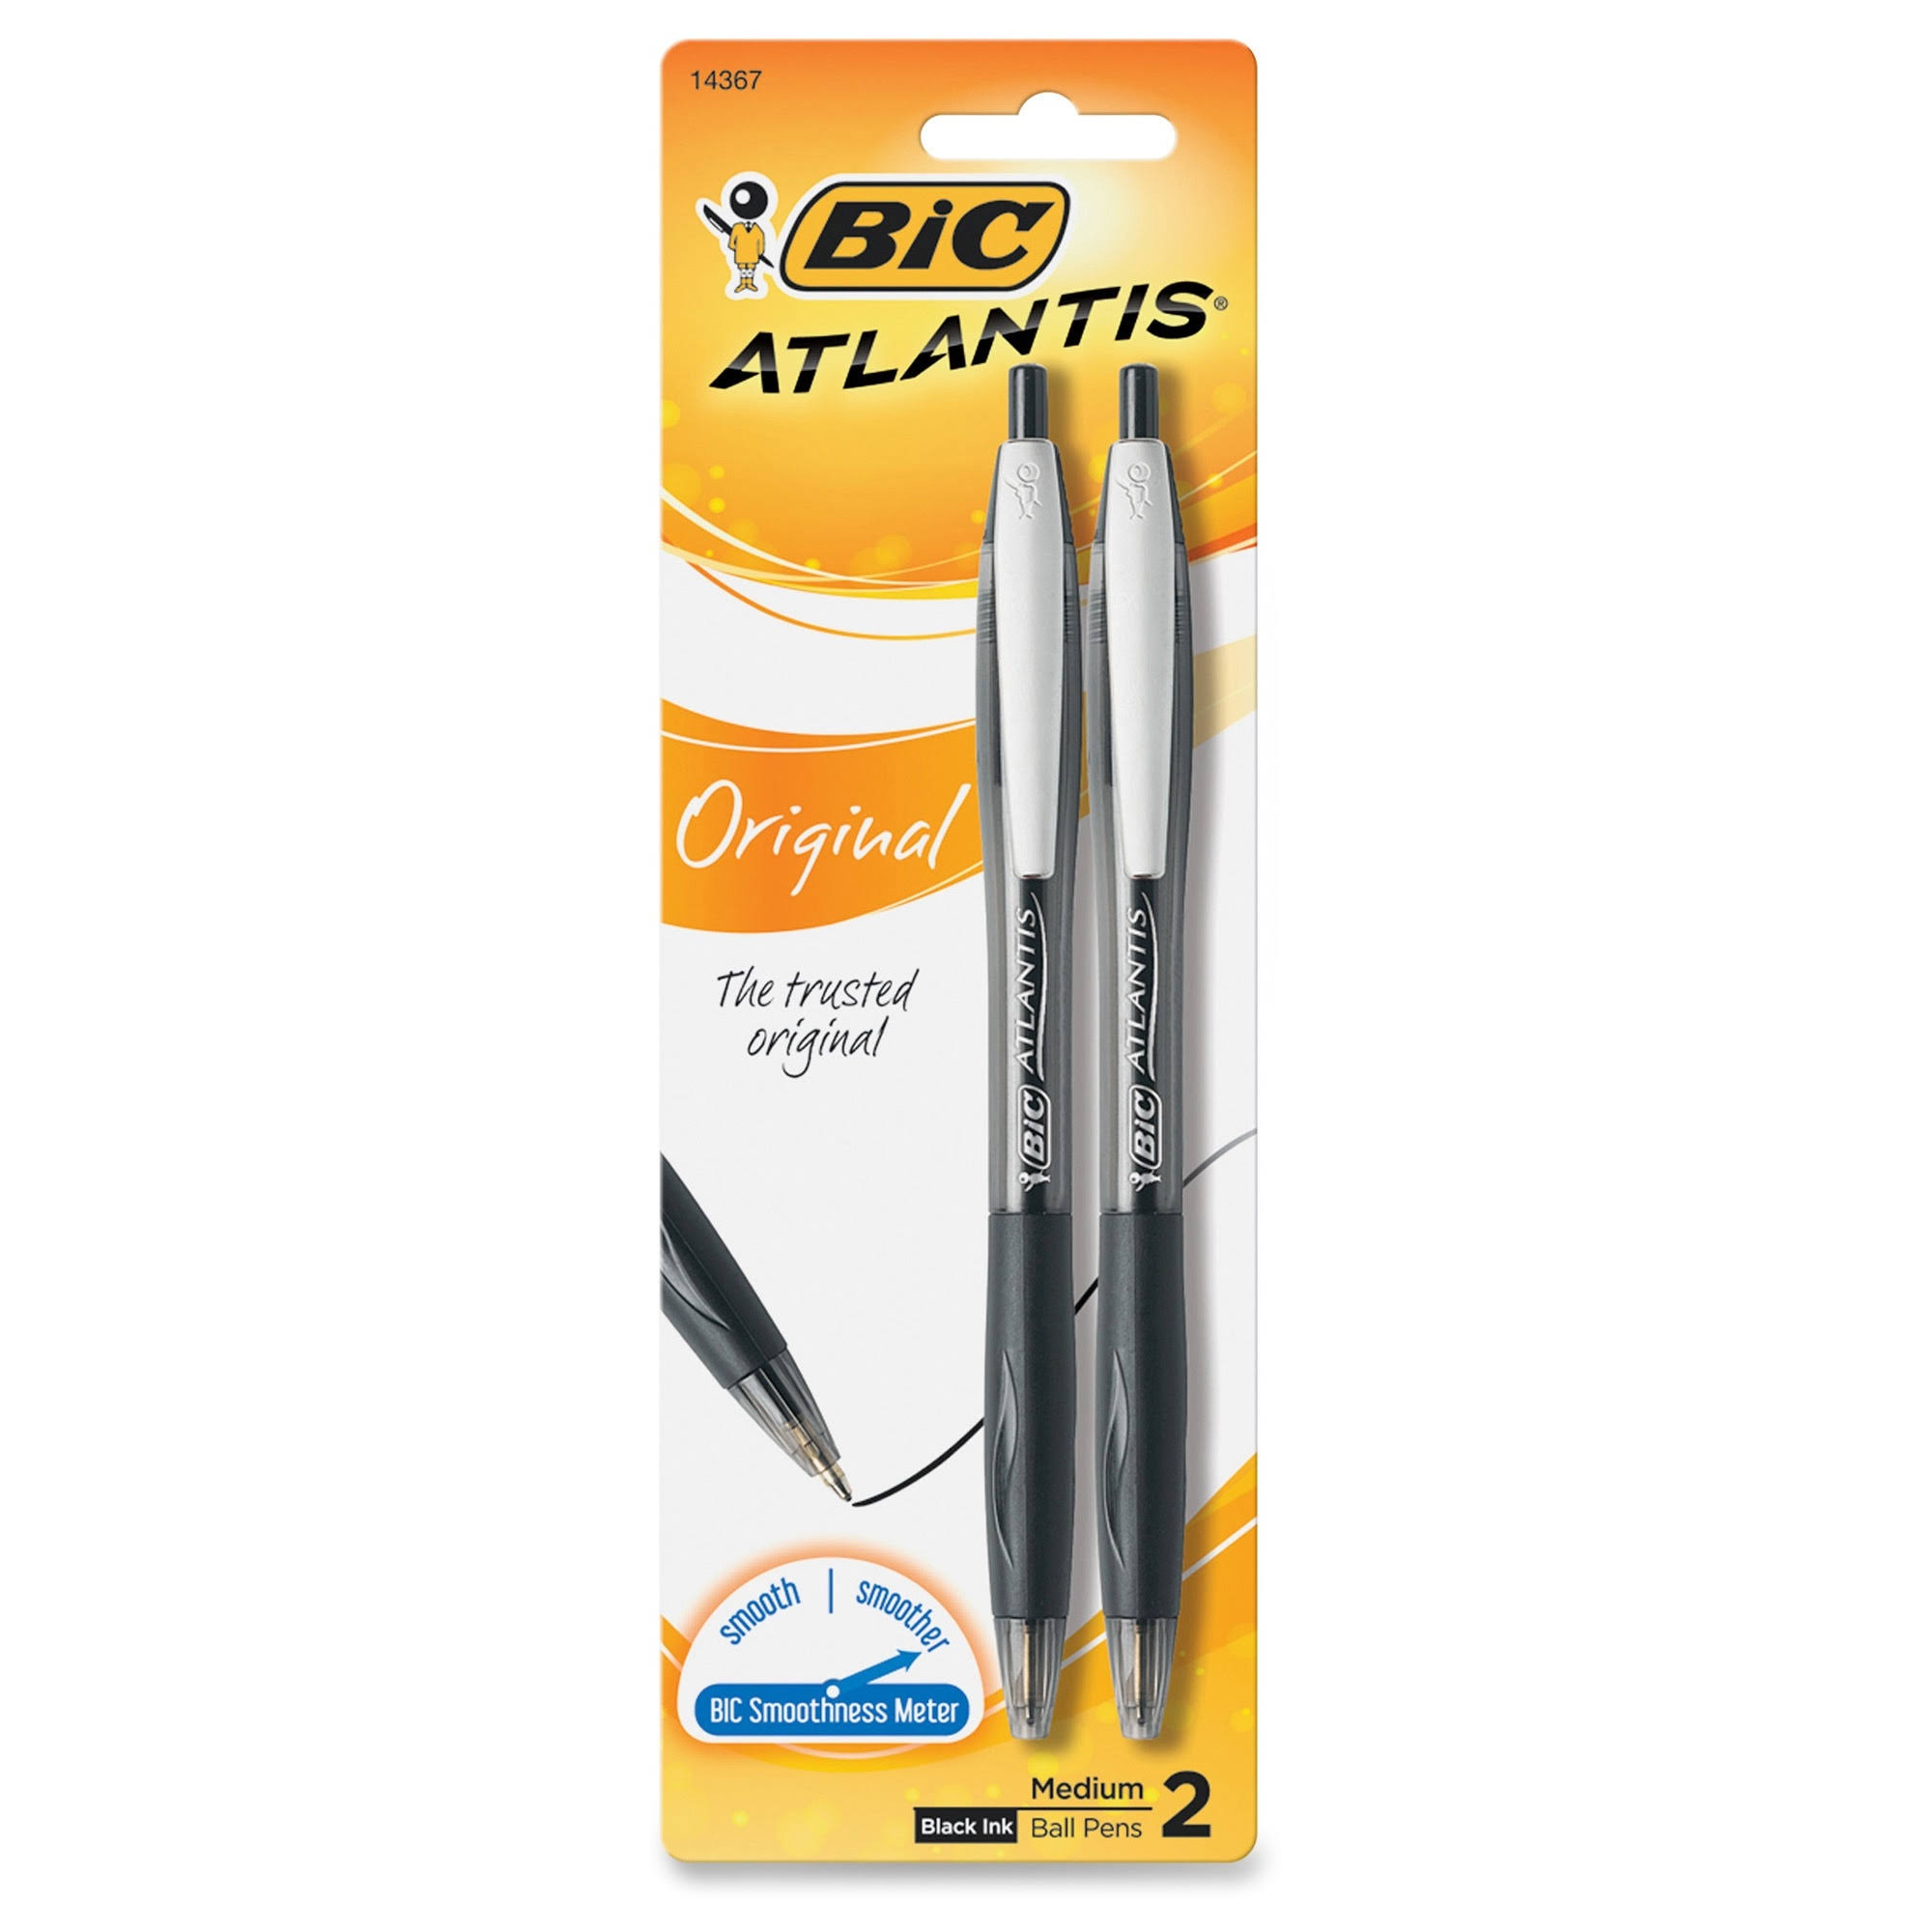 Bic Atlantis Original Ball Pens - Black Ink, 2ct, 1.0mm